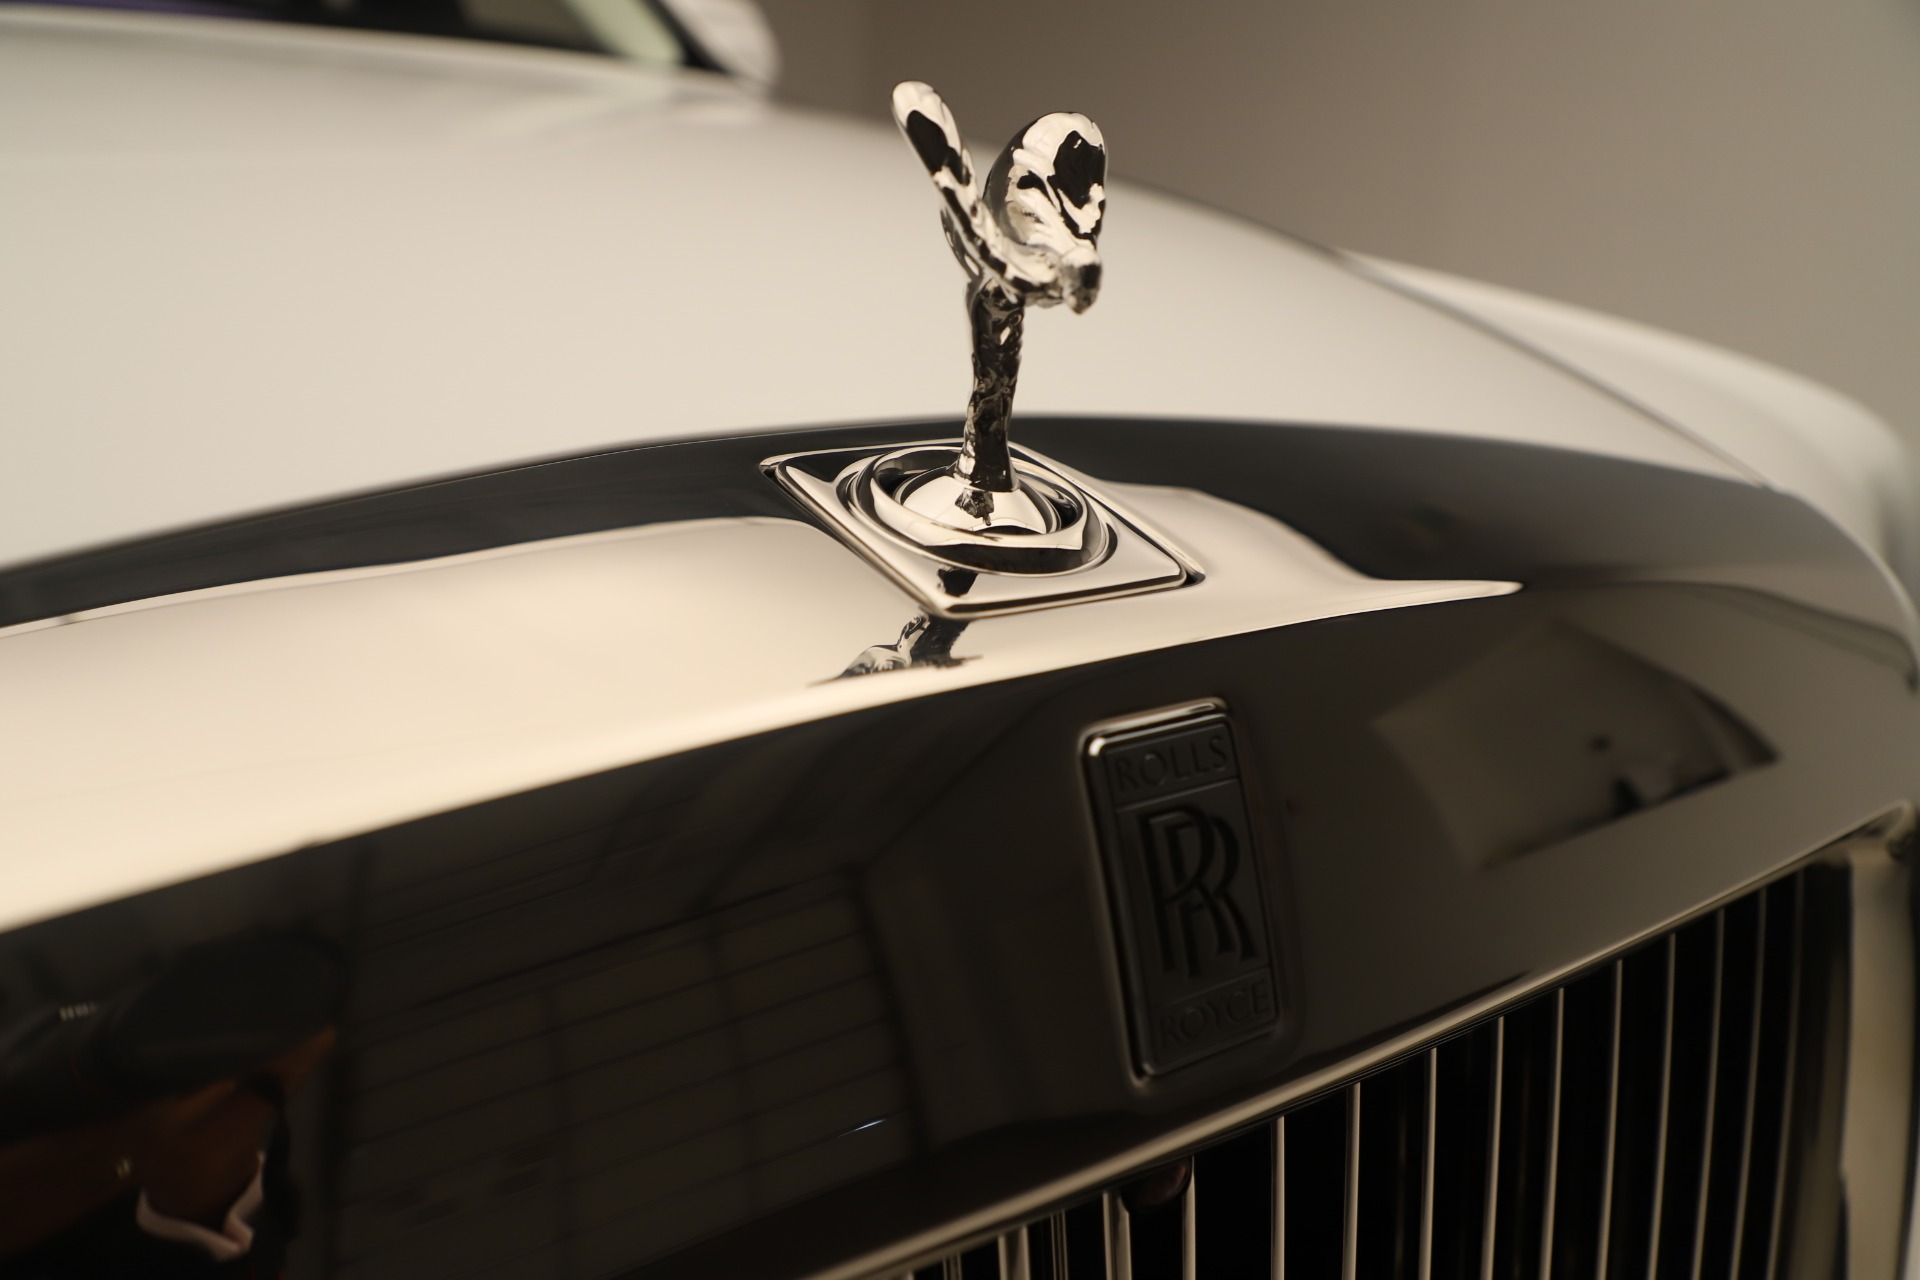 Used 2020 Rolls Royce Phantom